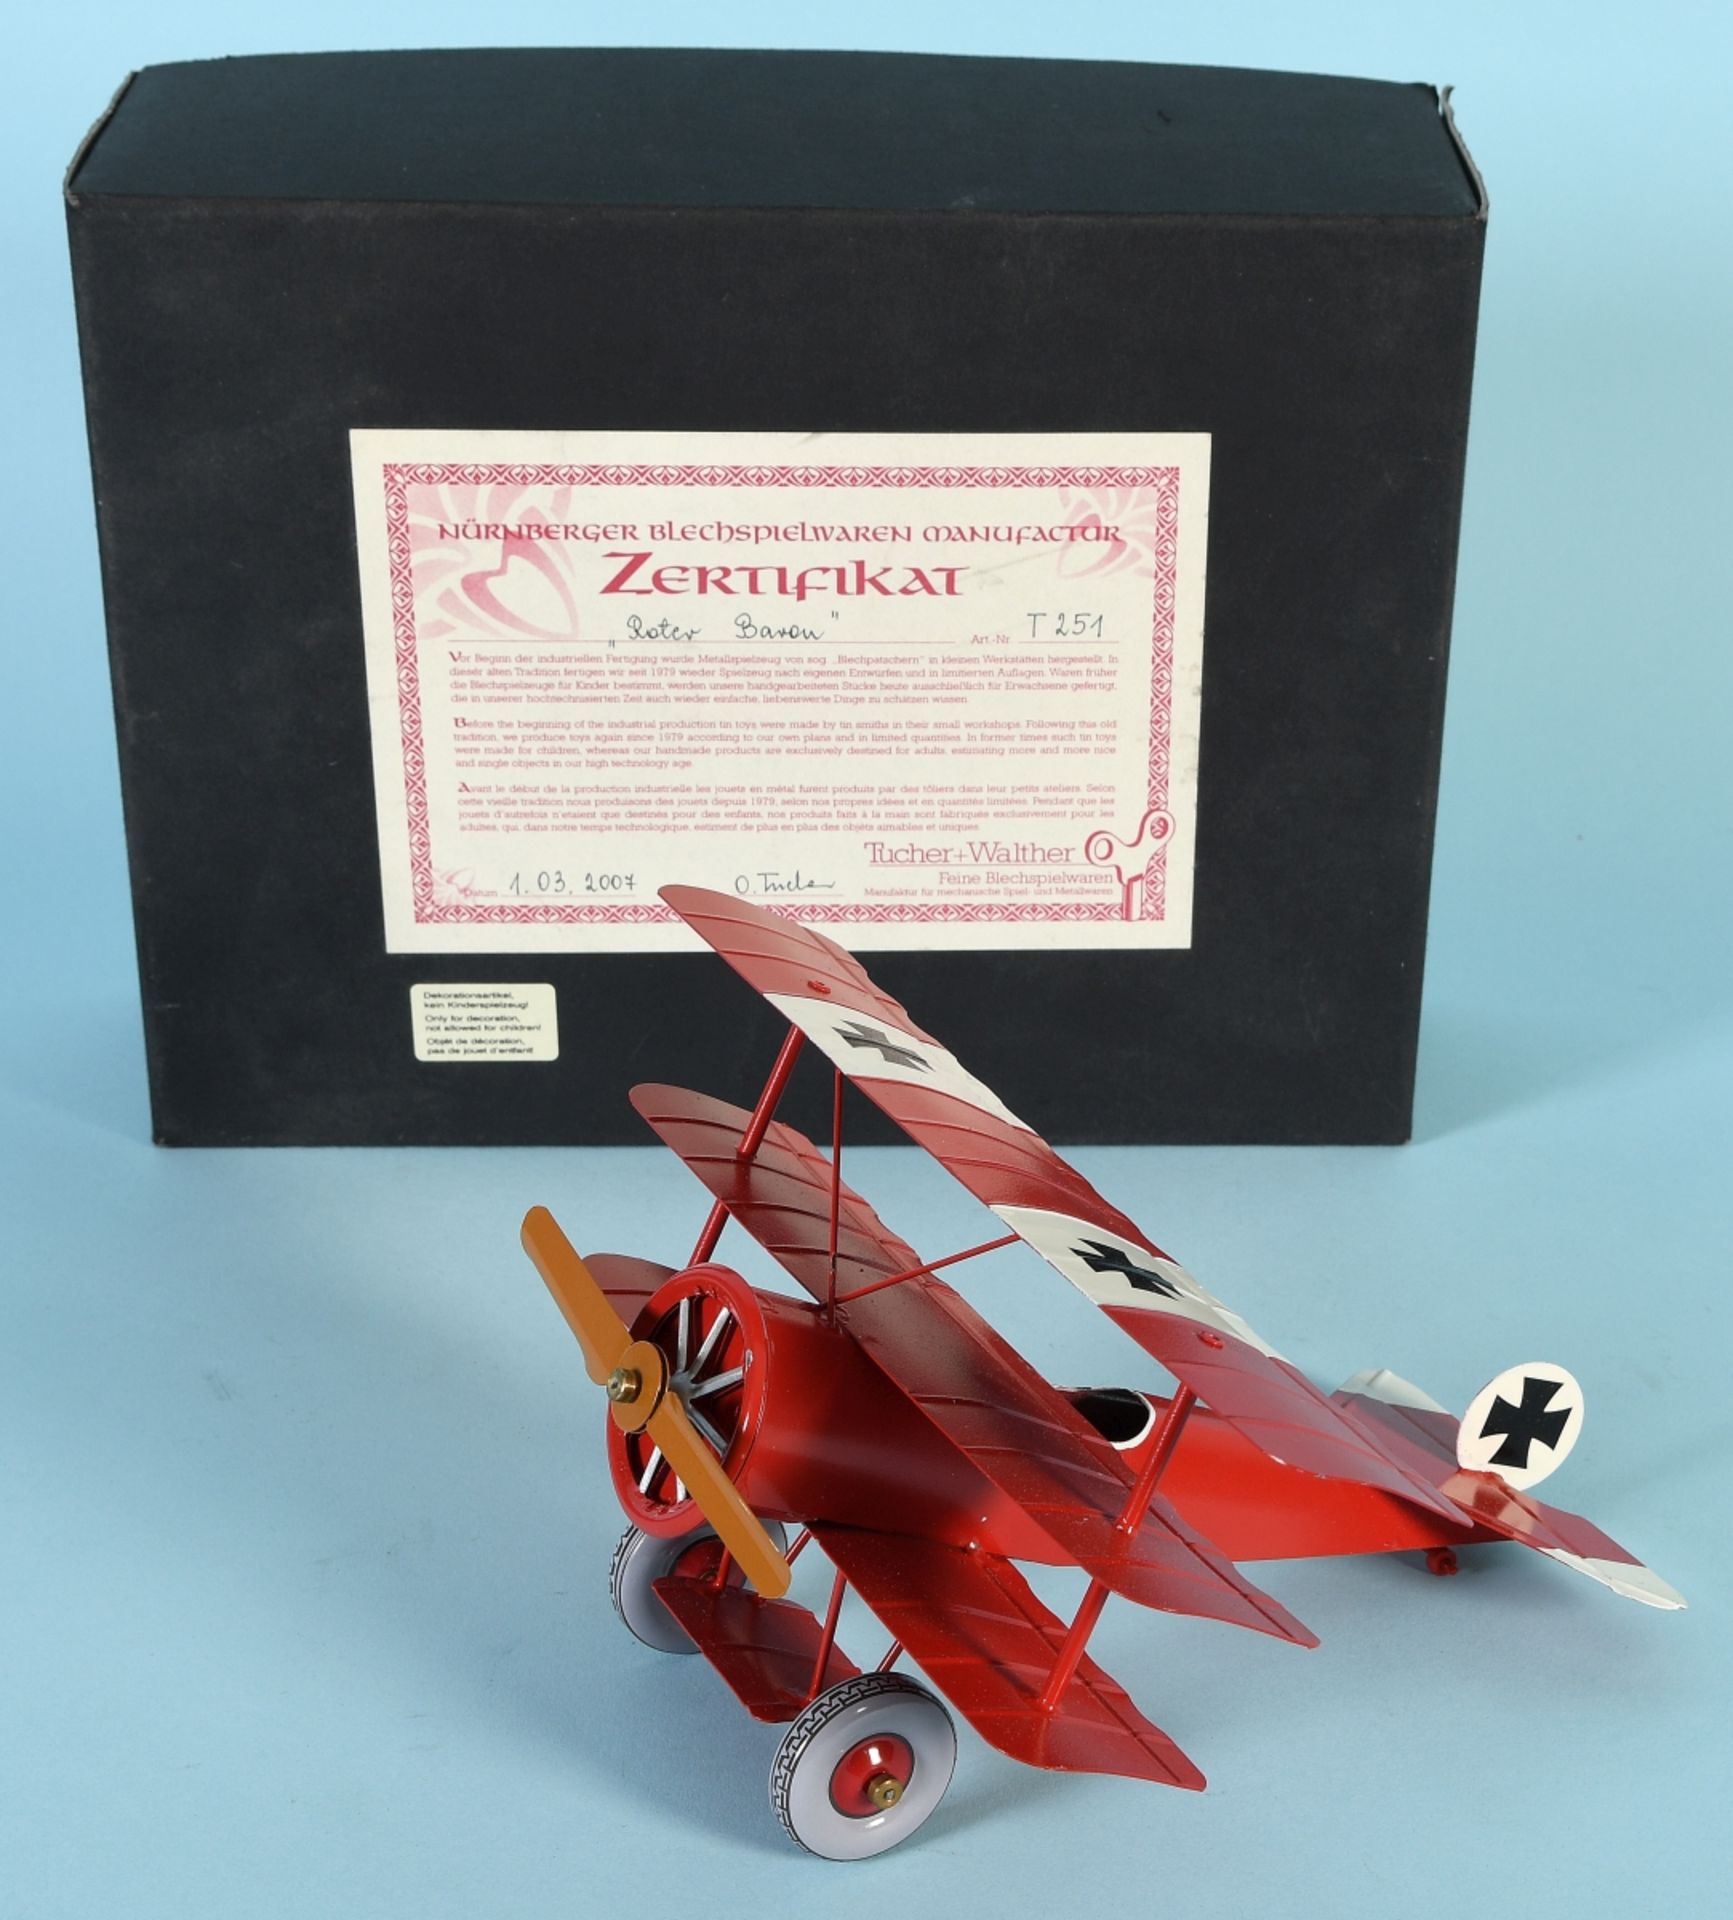 Modellflugzeug "Tucher & Walther" - Roter Baron - Bild 2 aus 2